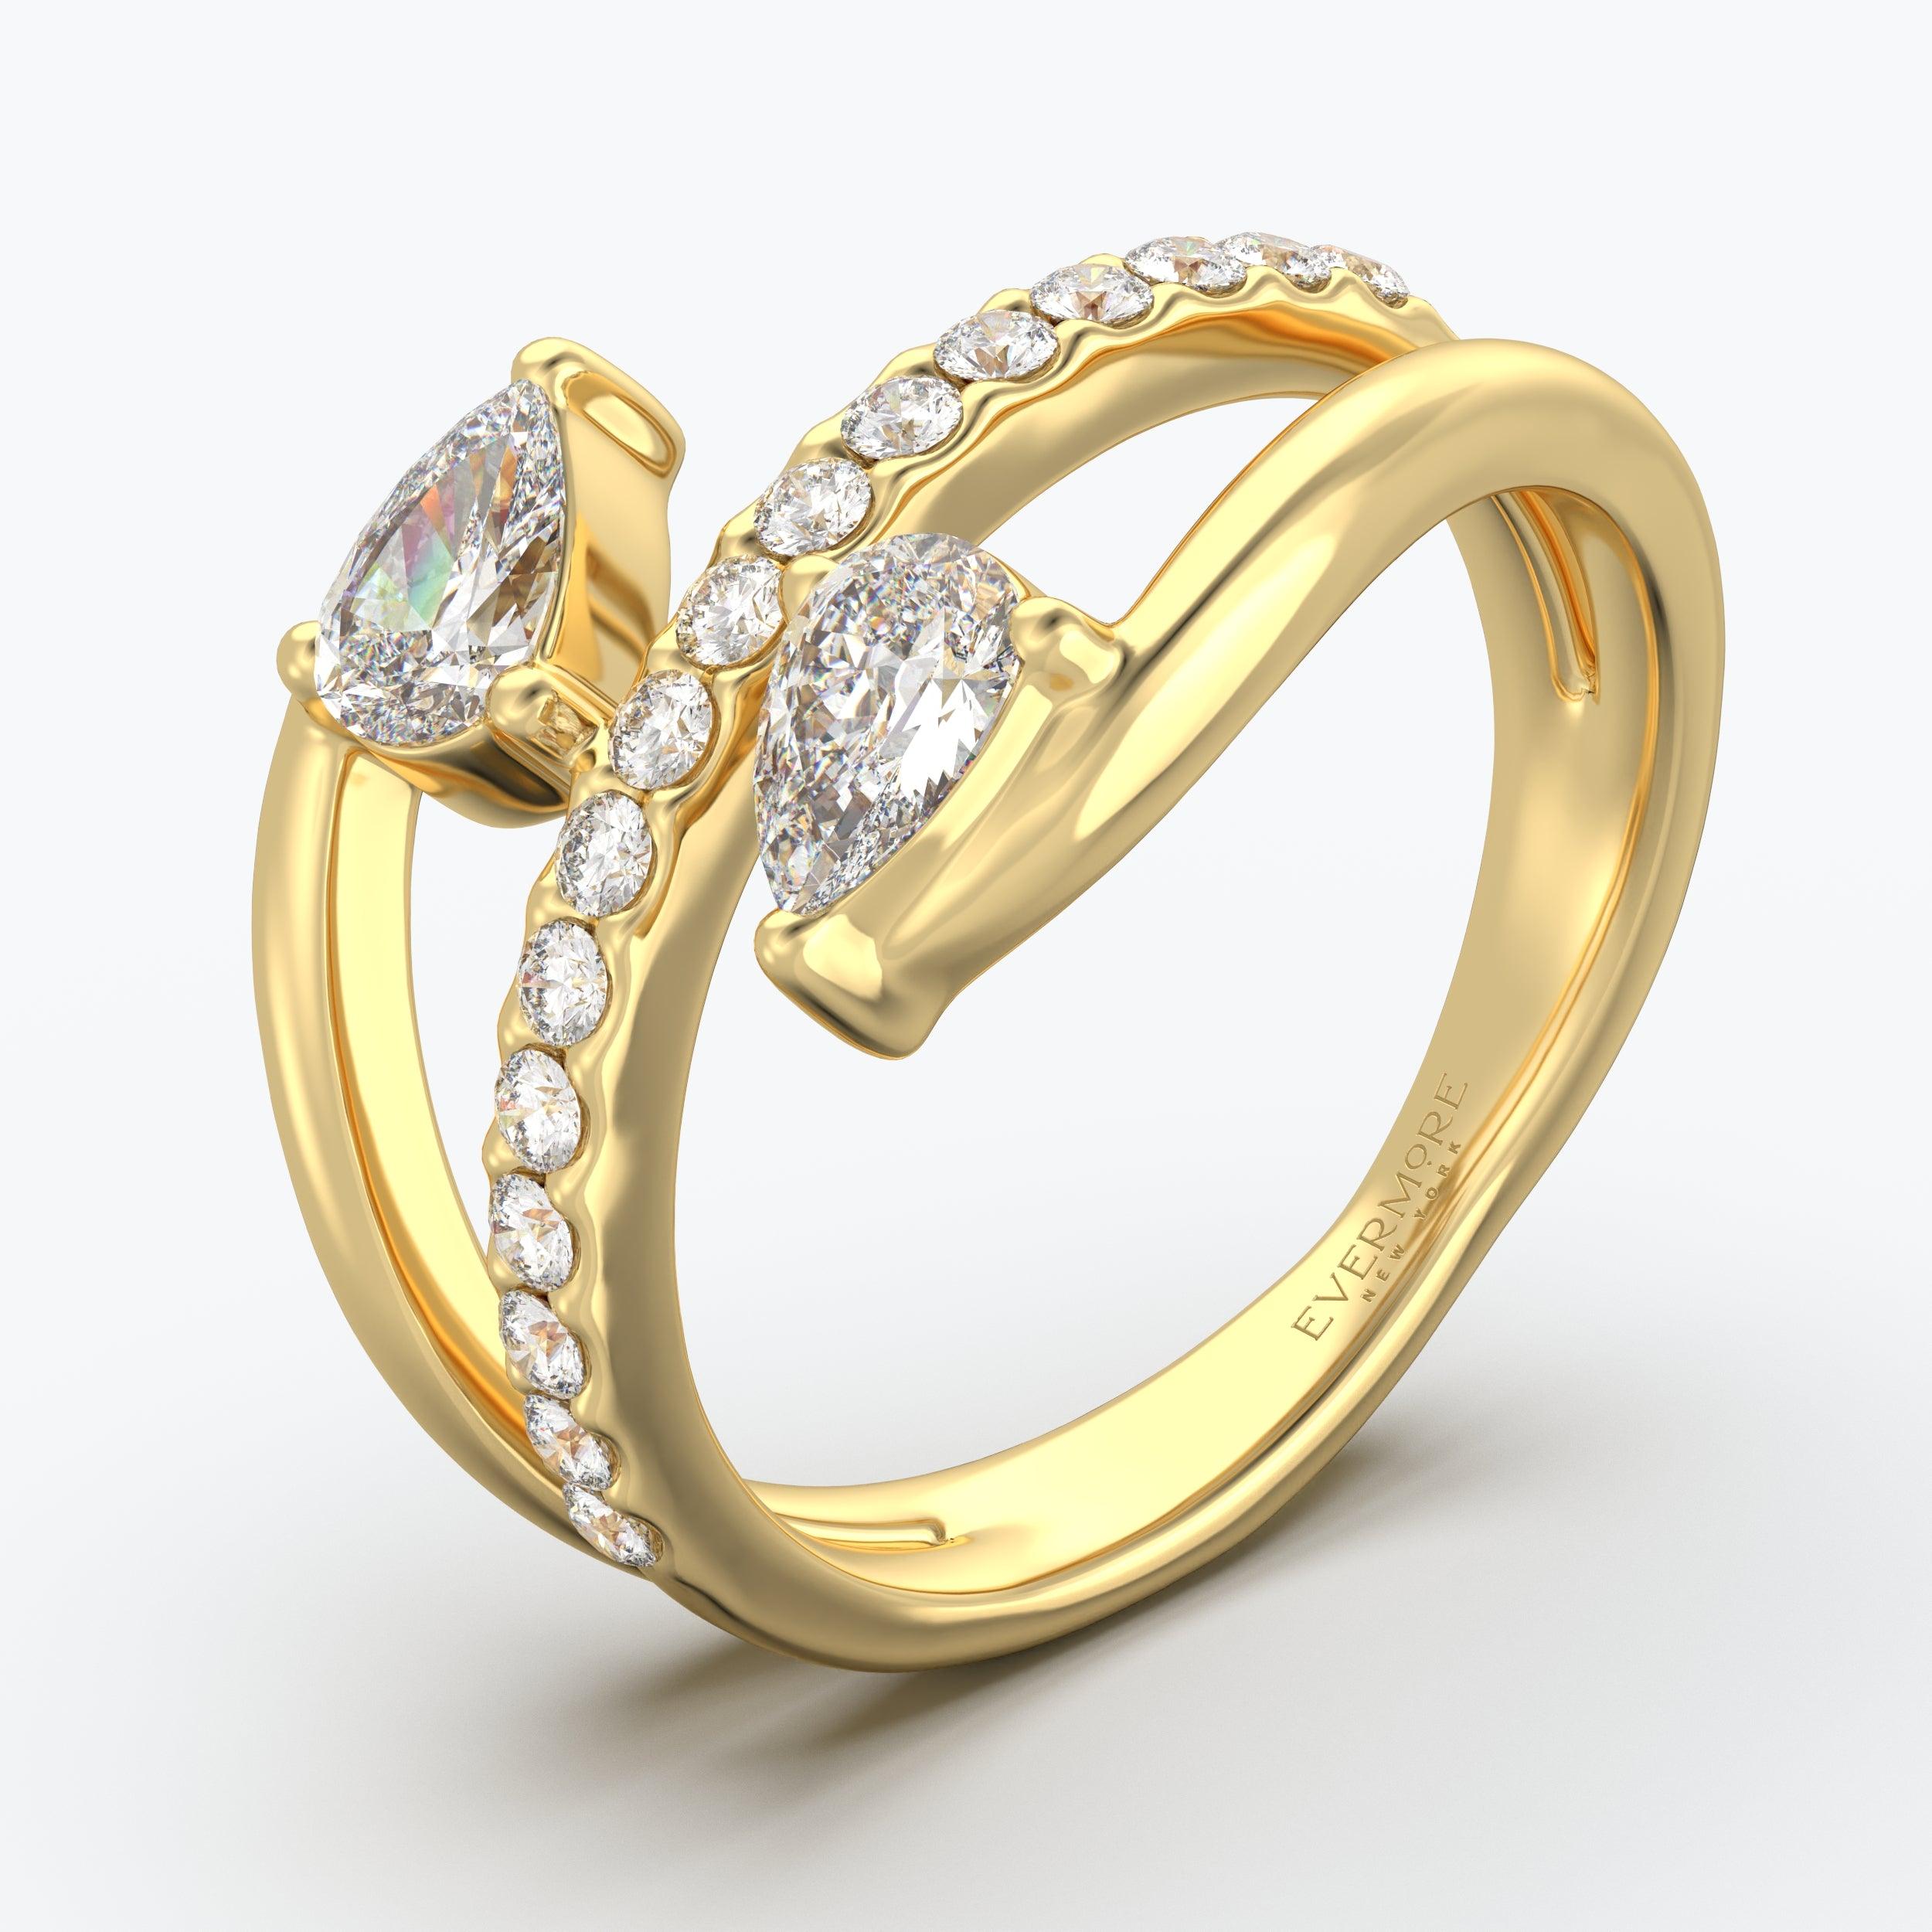 Engagement Rings Shop in Dubai | Diamonds Dubai | Buy diamond ring, Engagement  rings, Shop engagement rings